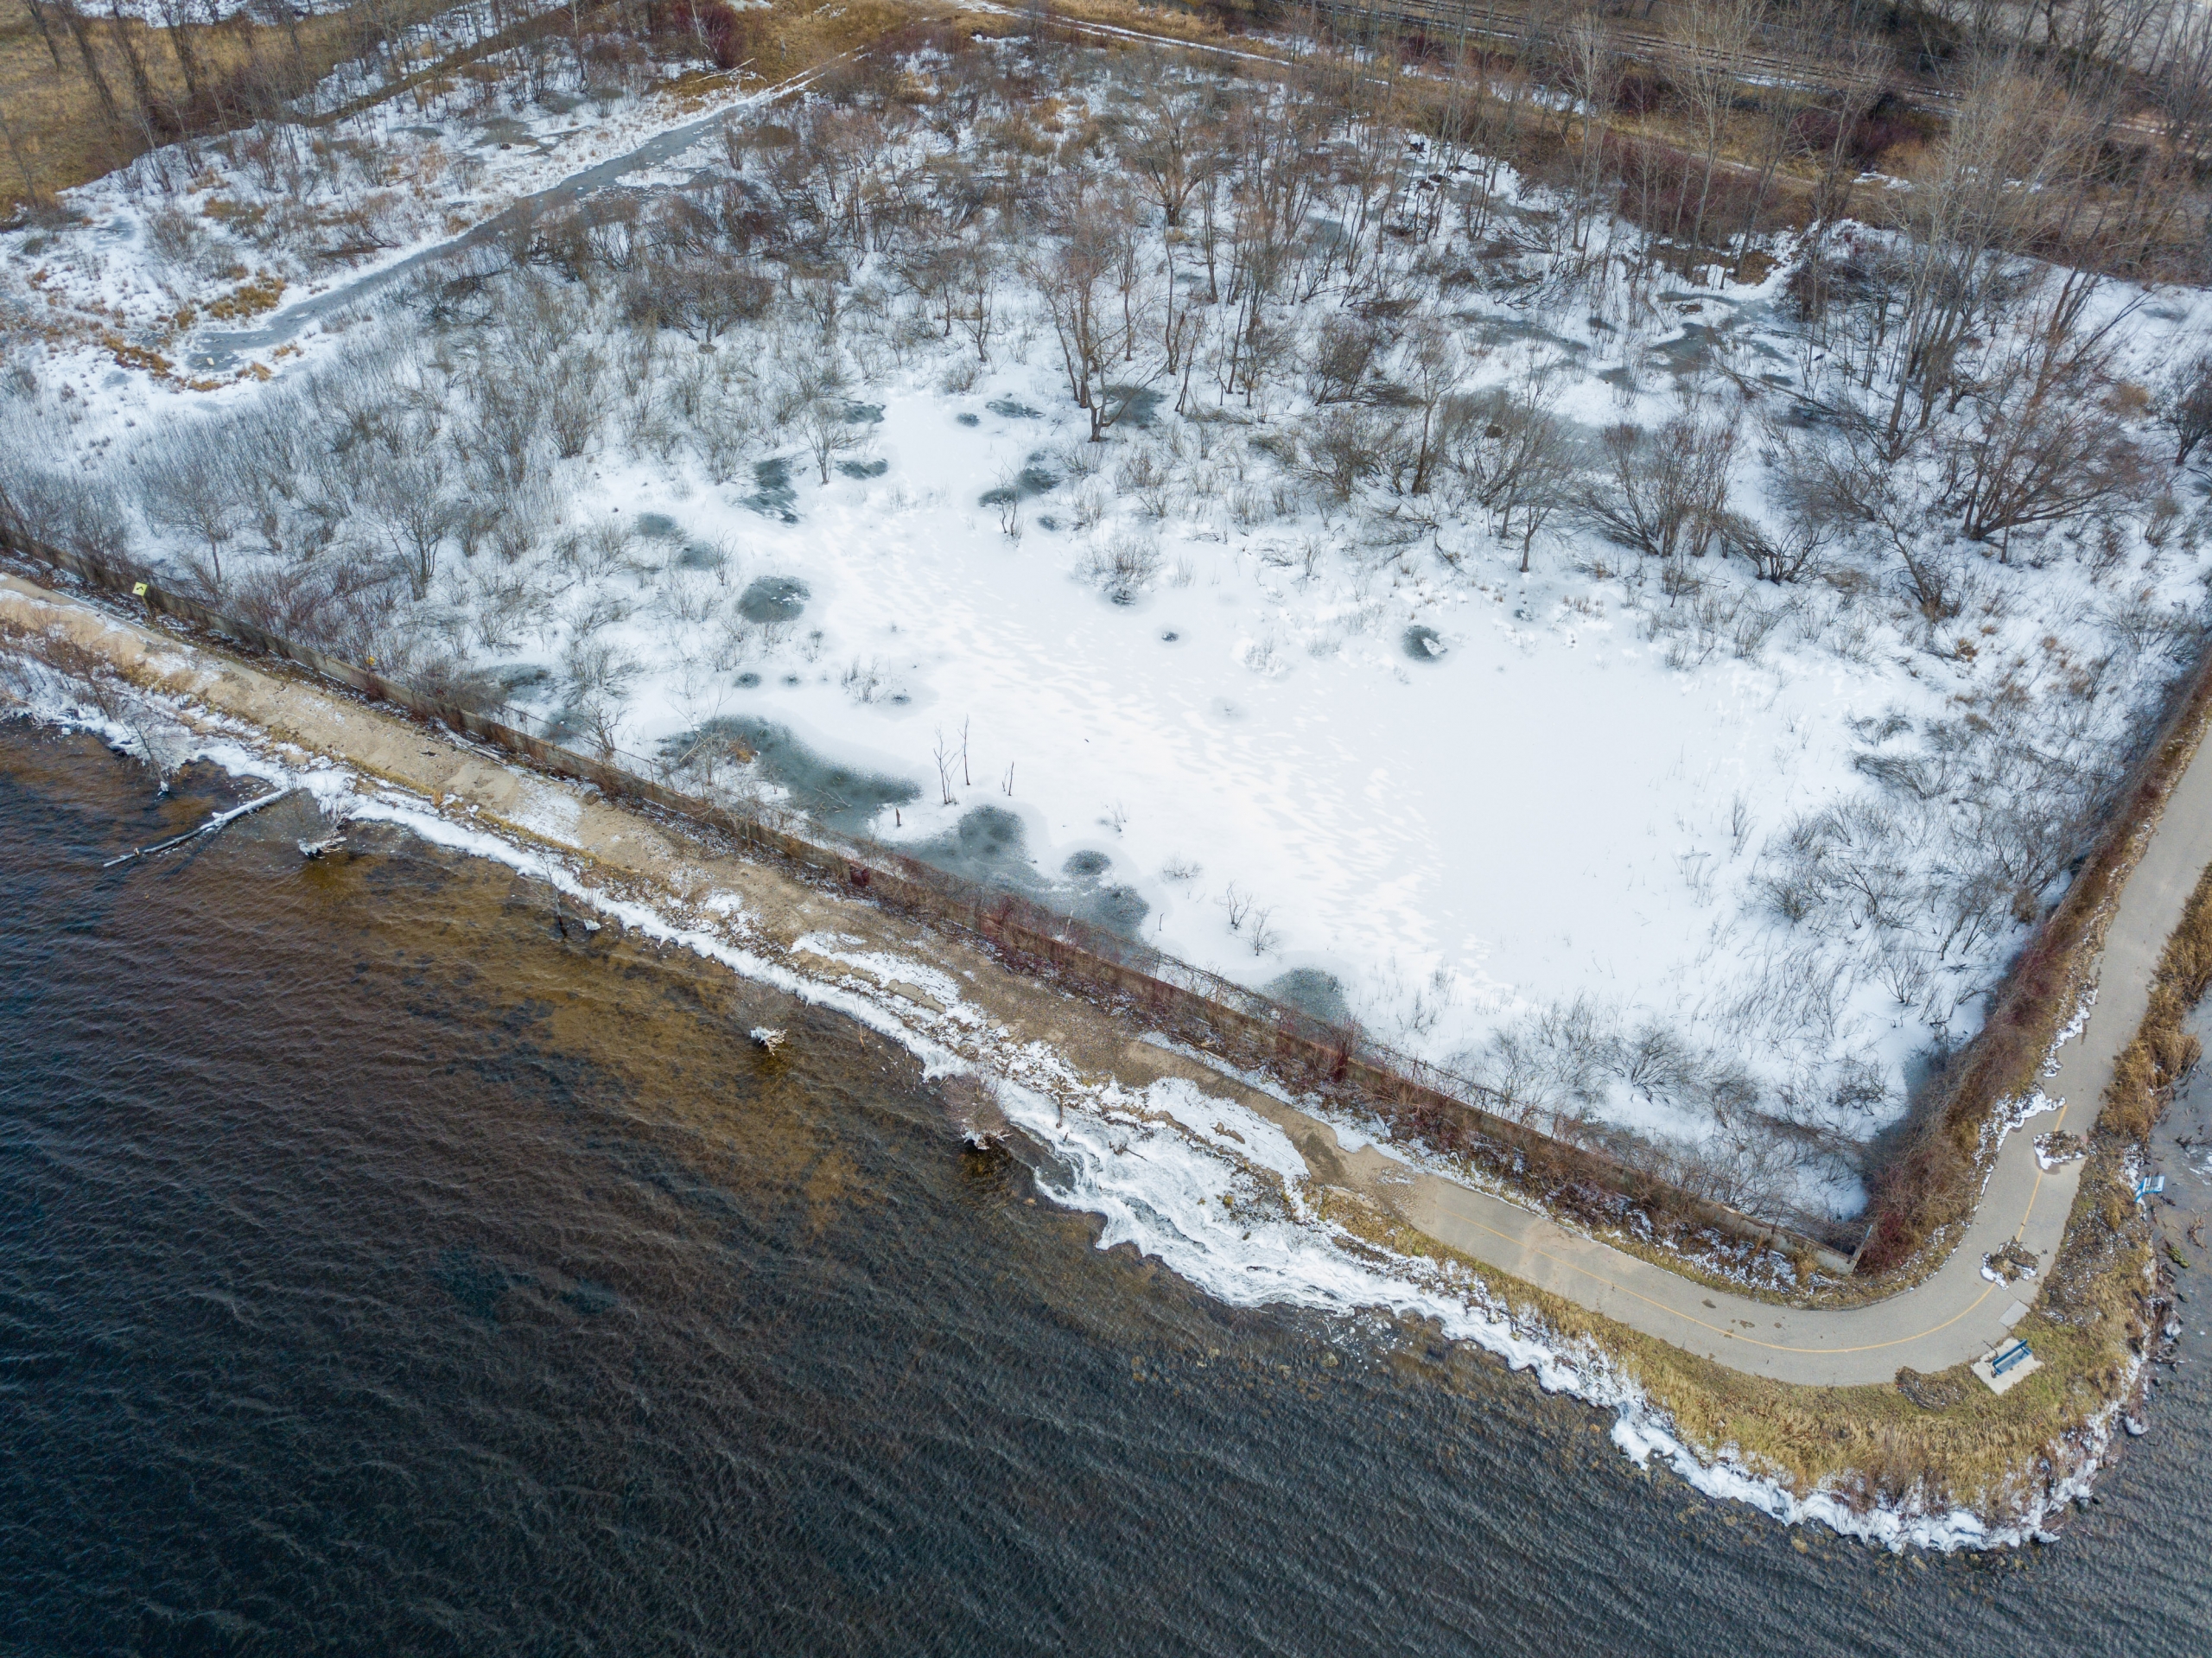 Muskegon Lakeshore Trail erosion damage drone photo